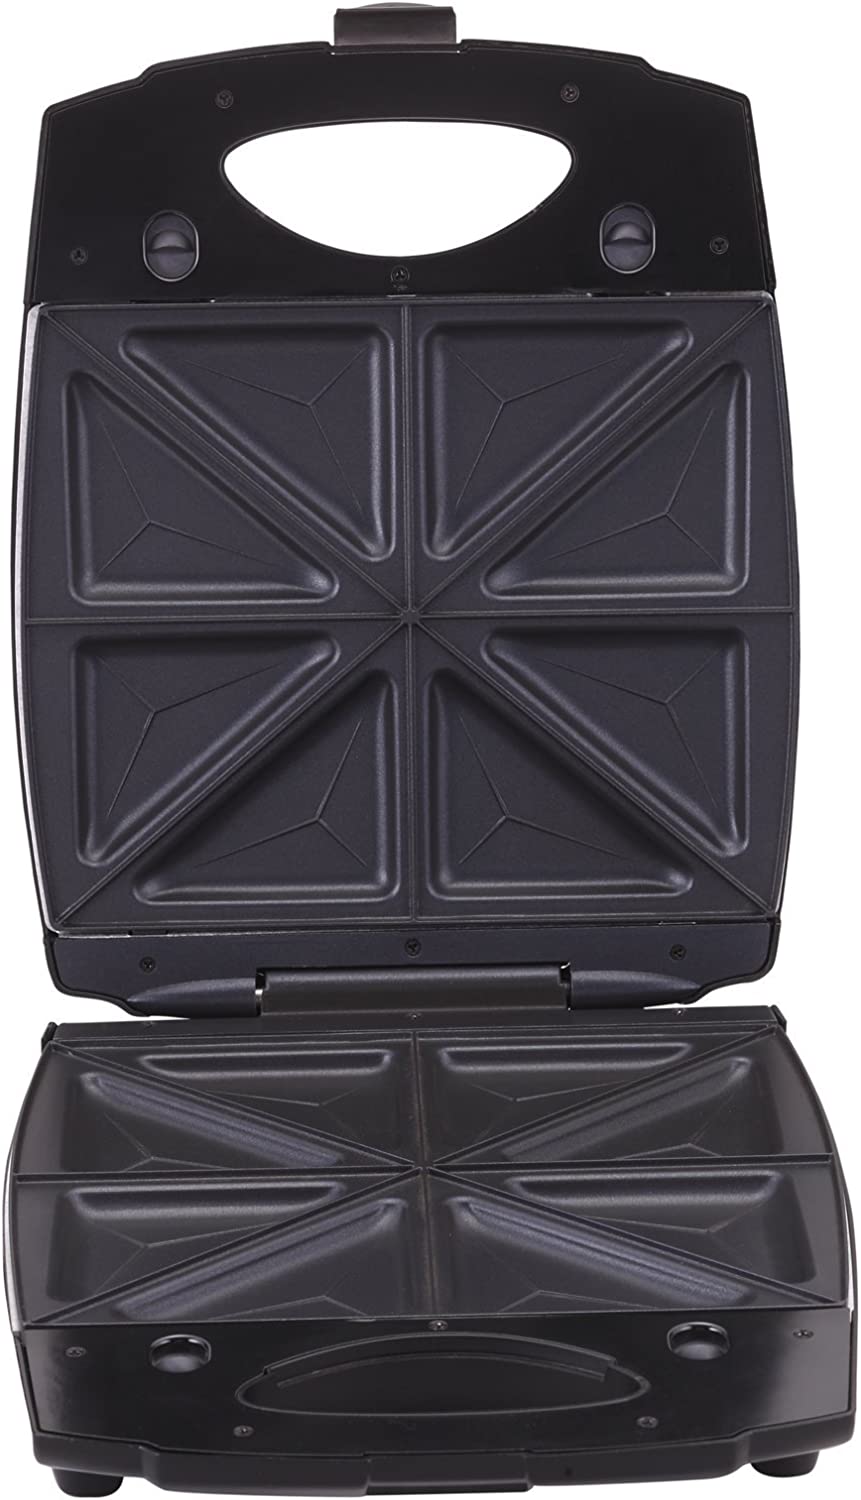 Black & Decker Sandwich maker, 4 Slices, 1400W, TS4080-B5, Black - UPC:  5035048202319